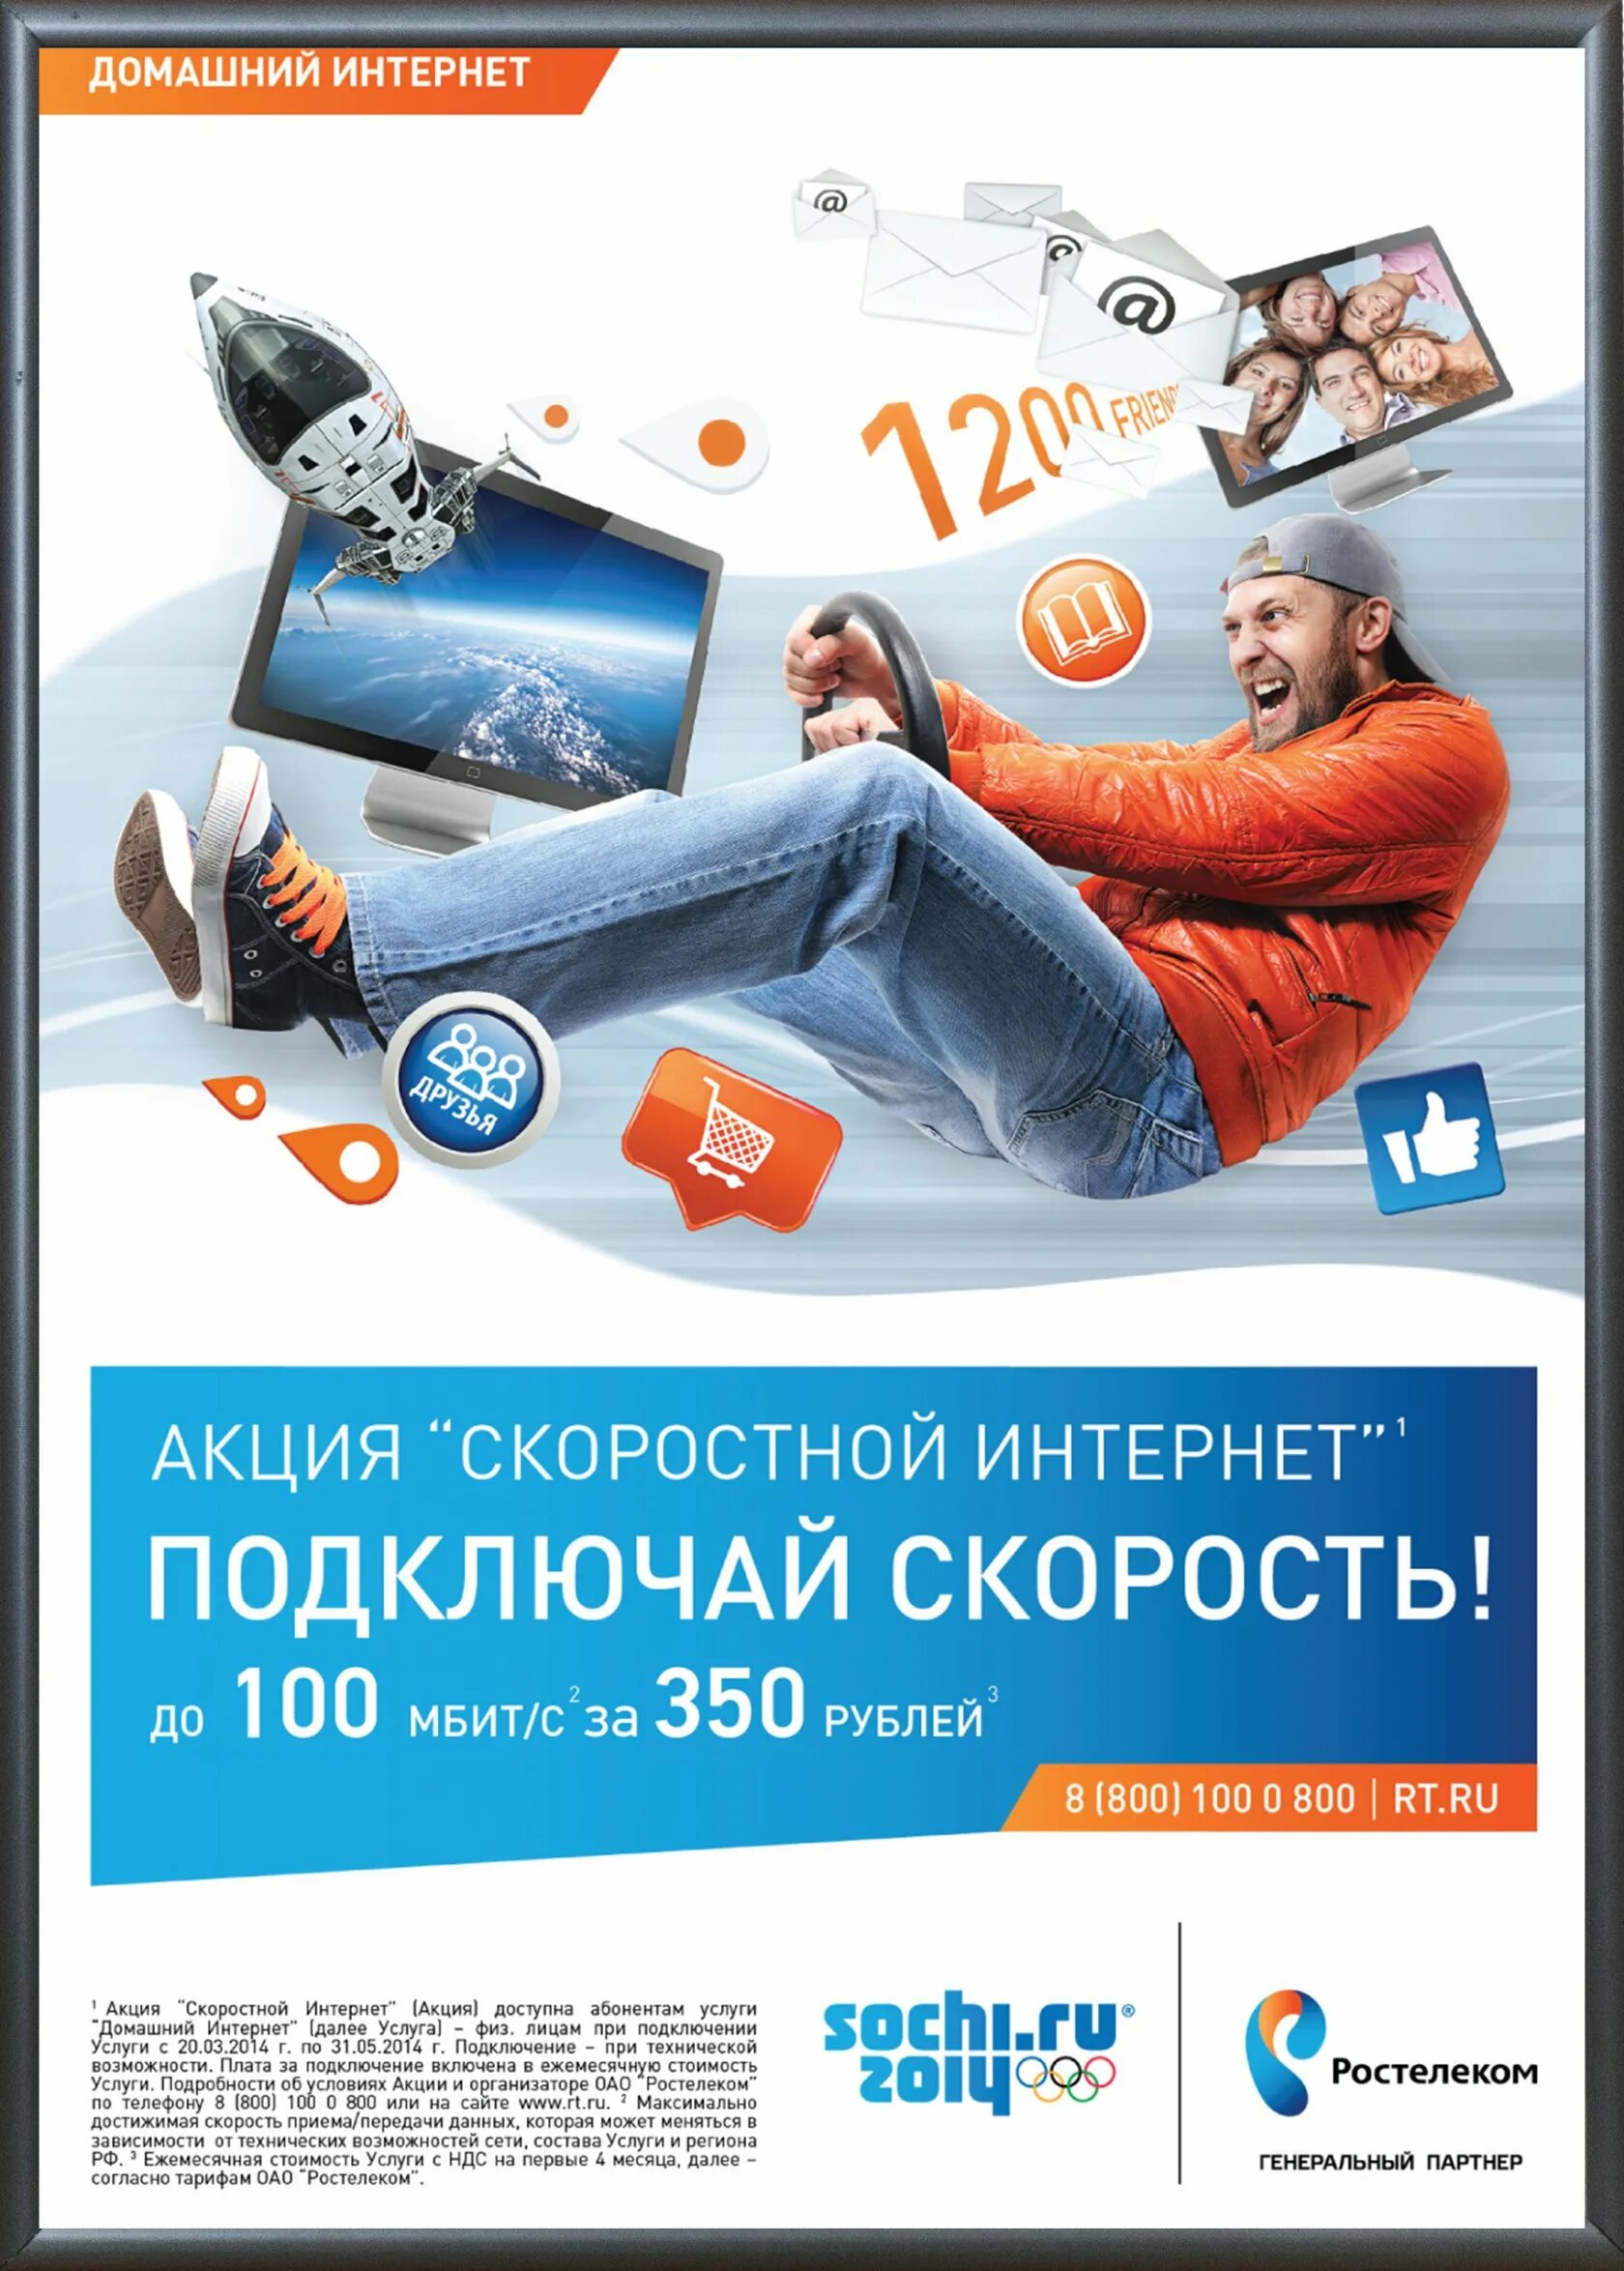 Реклама интернета Ростелеком. Листовки Ростелеком. Реклама интернет провайдера Ростелеком. Баннер интернет провайдера.